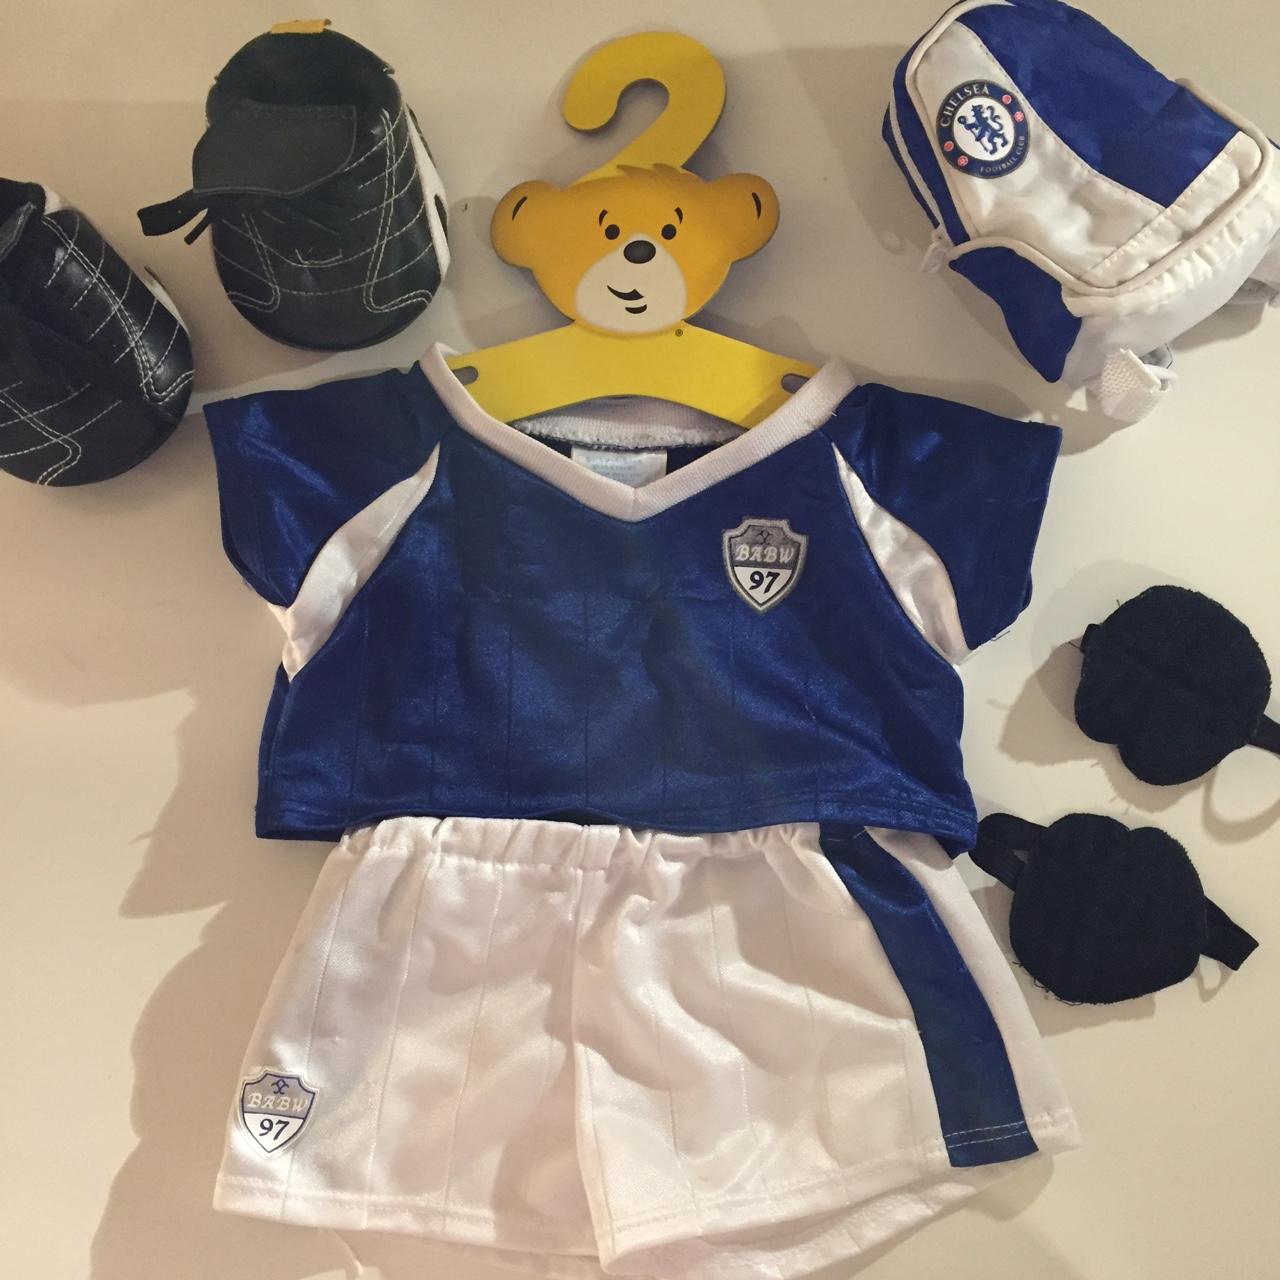 Build a bear football kit, including top, shorts, - Depop